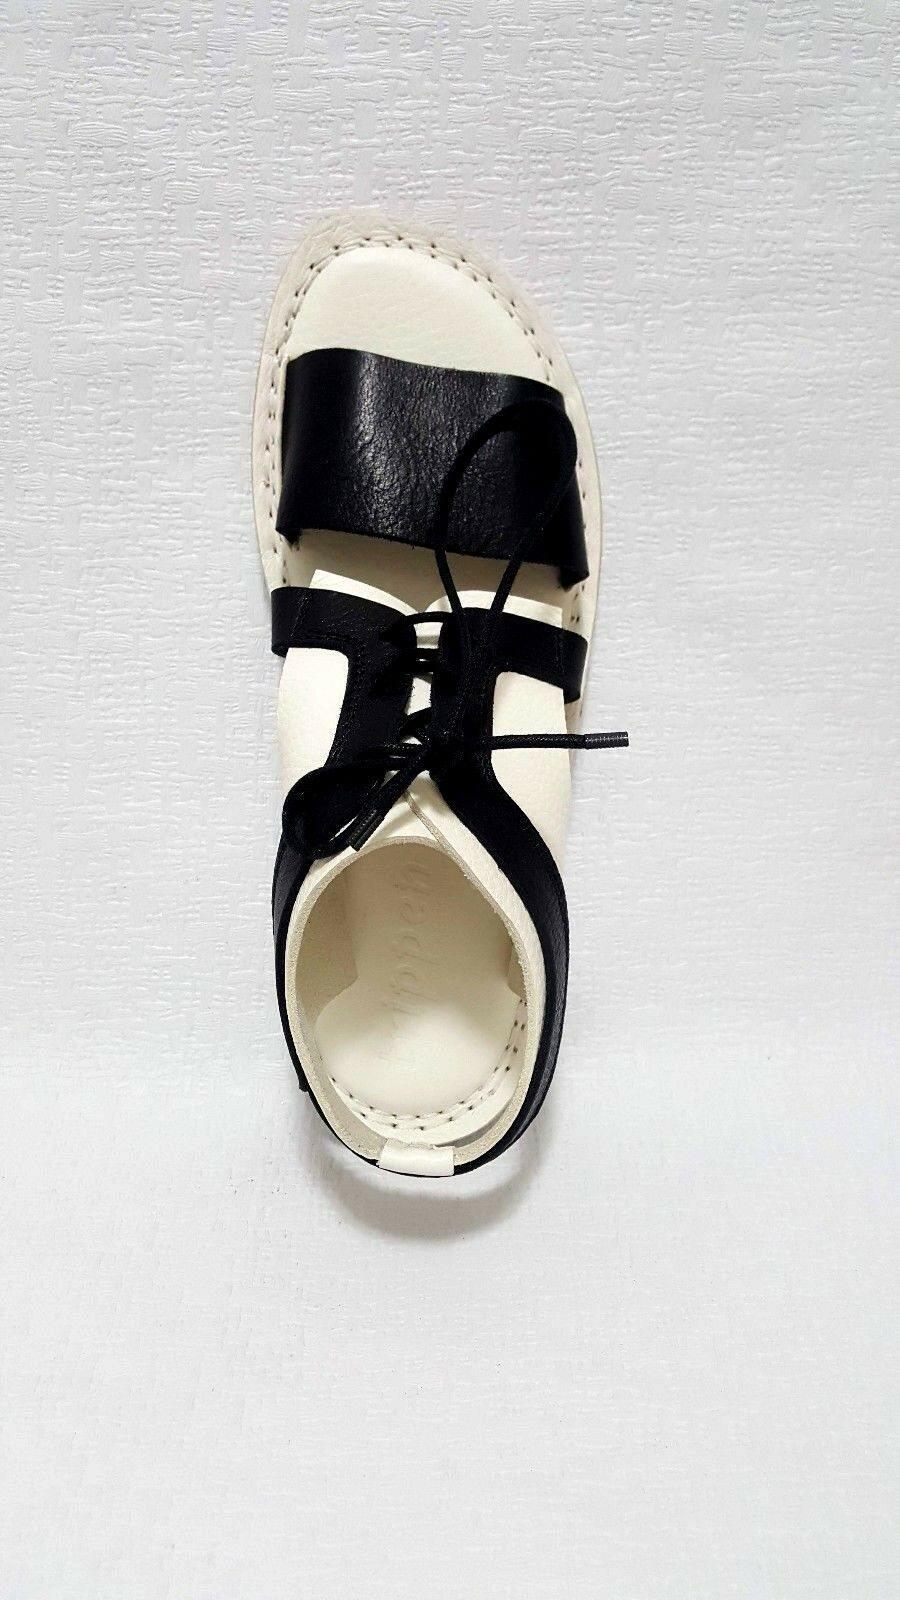 NEW Trippen Rack Black White Leather Sandals Shoe Size  EU 36 - SVNYFancy